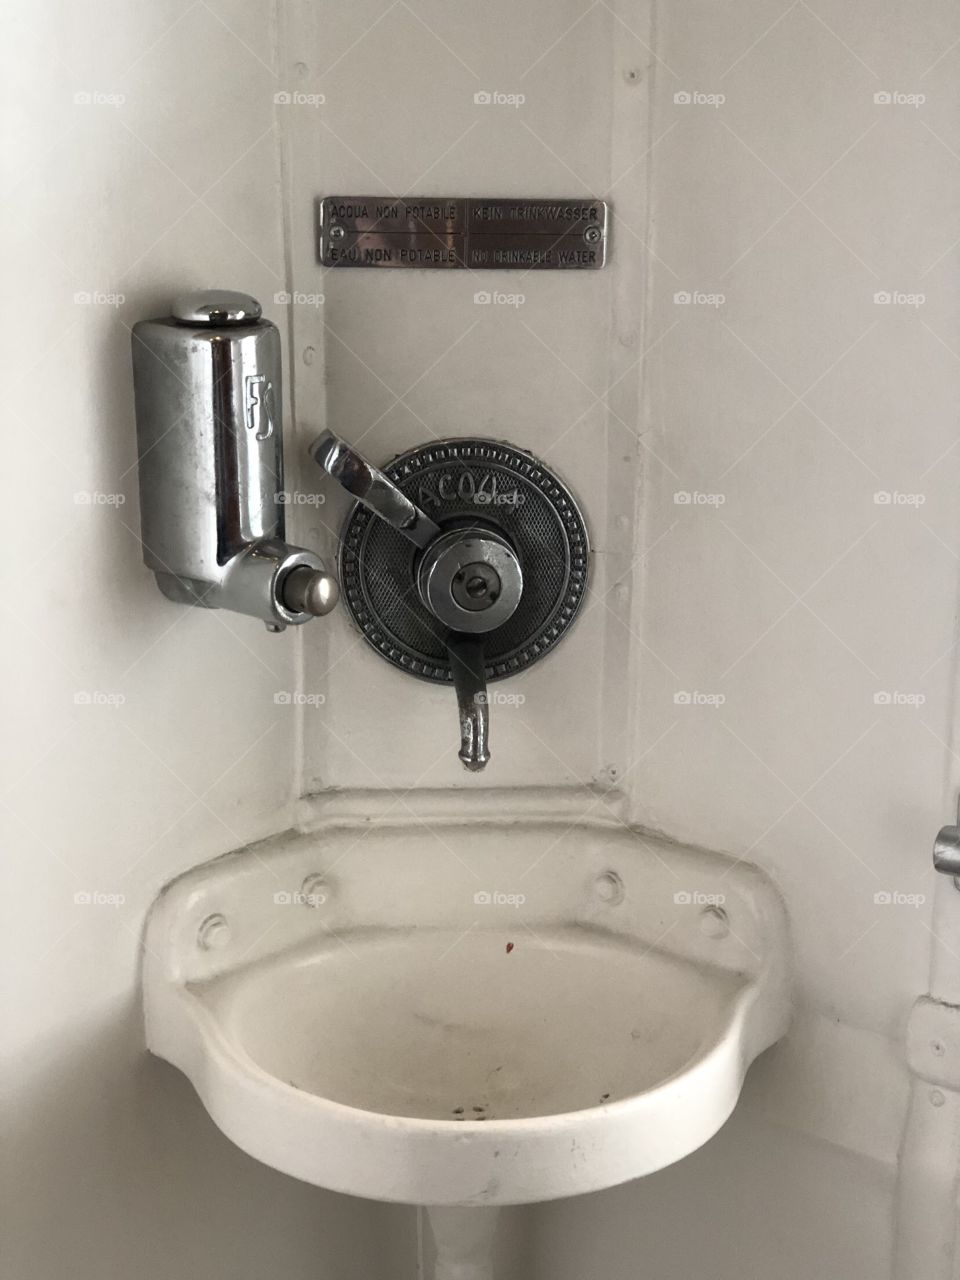 Inside a train’s bathroom